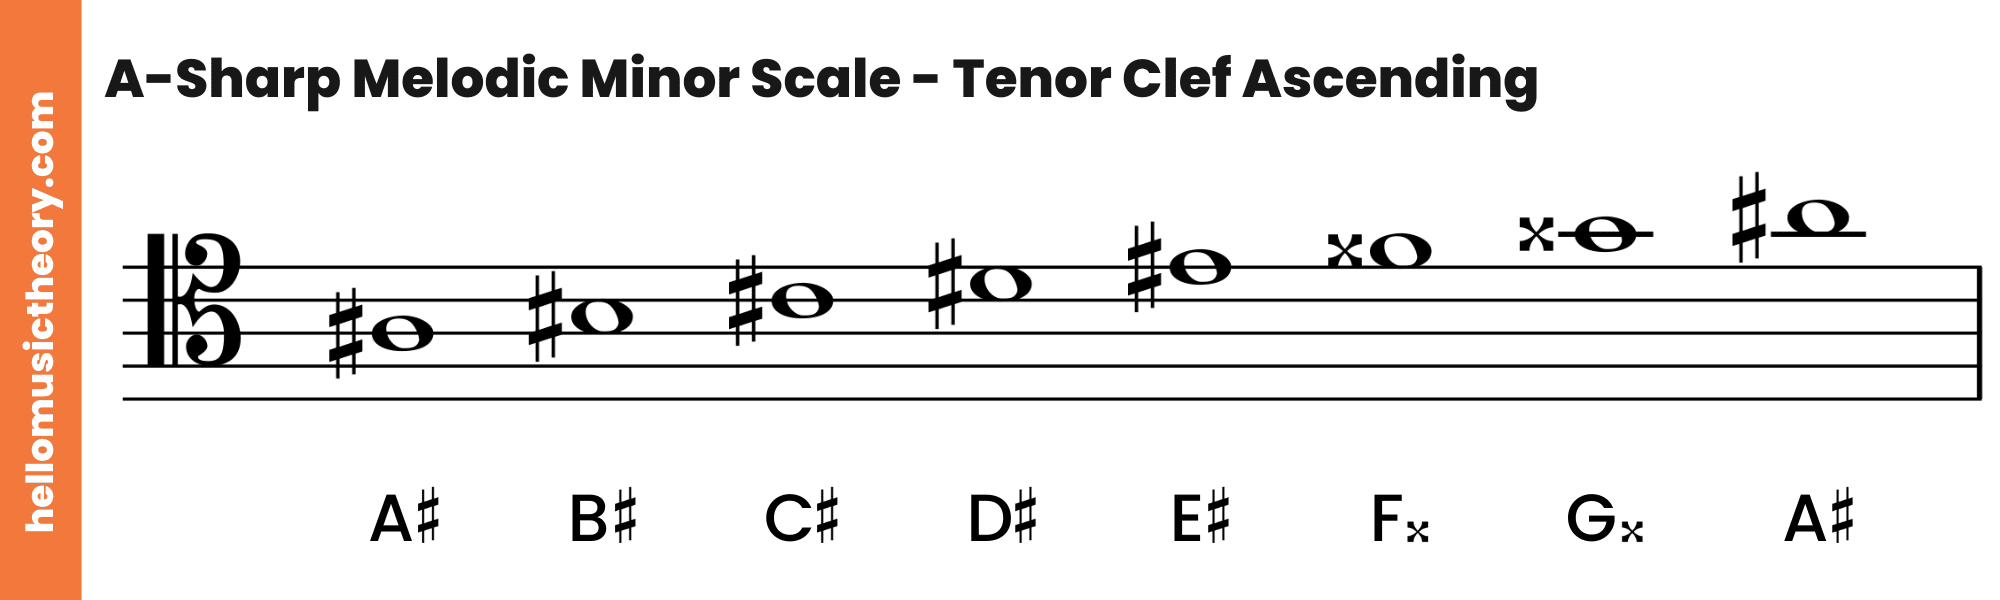 A-Sharp Melodic Minor Scale Tenor Clef Ascending